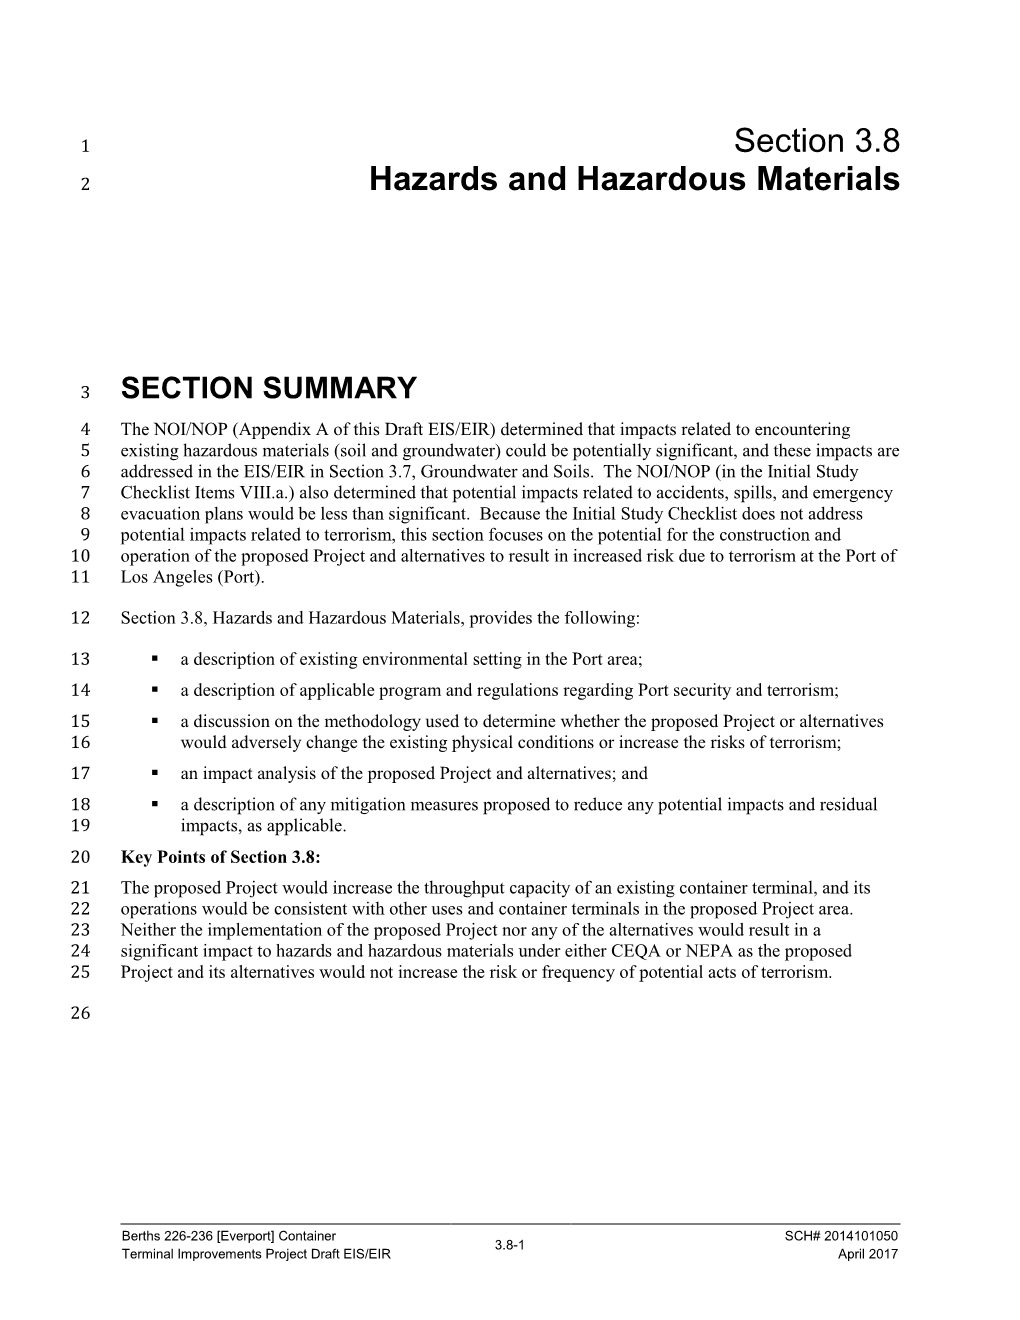 Section 3.8 Hazards and Hazardous Materials